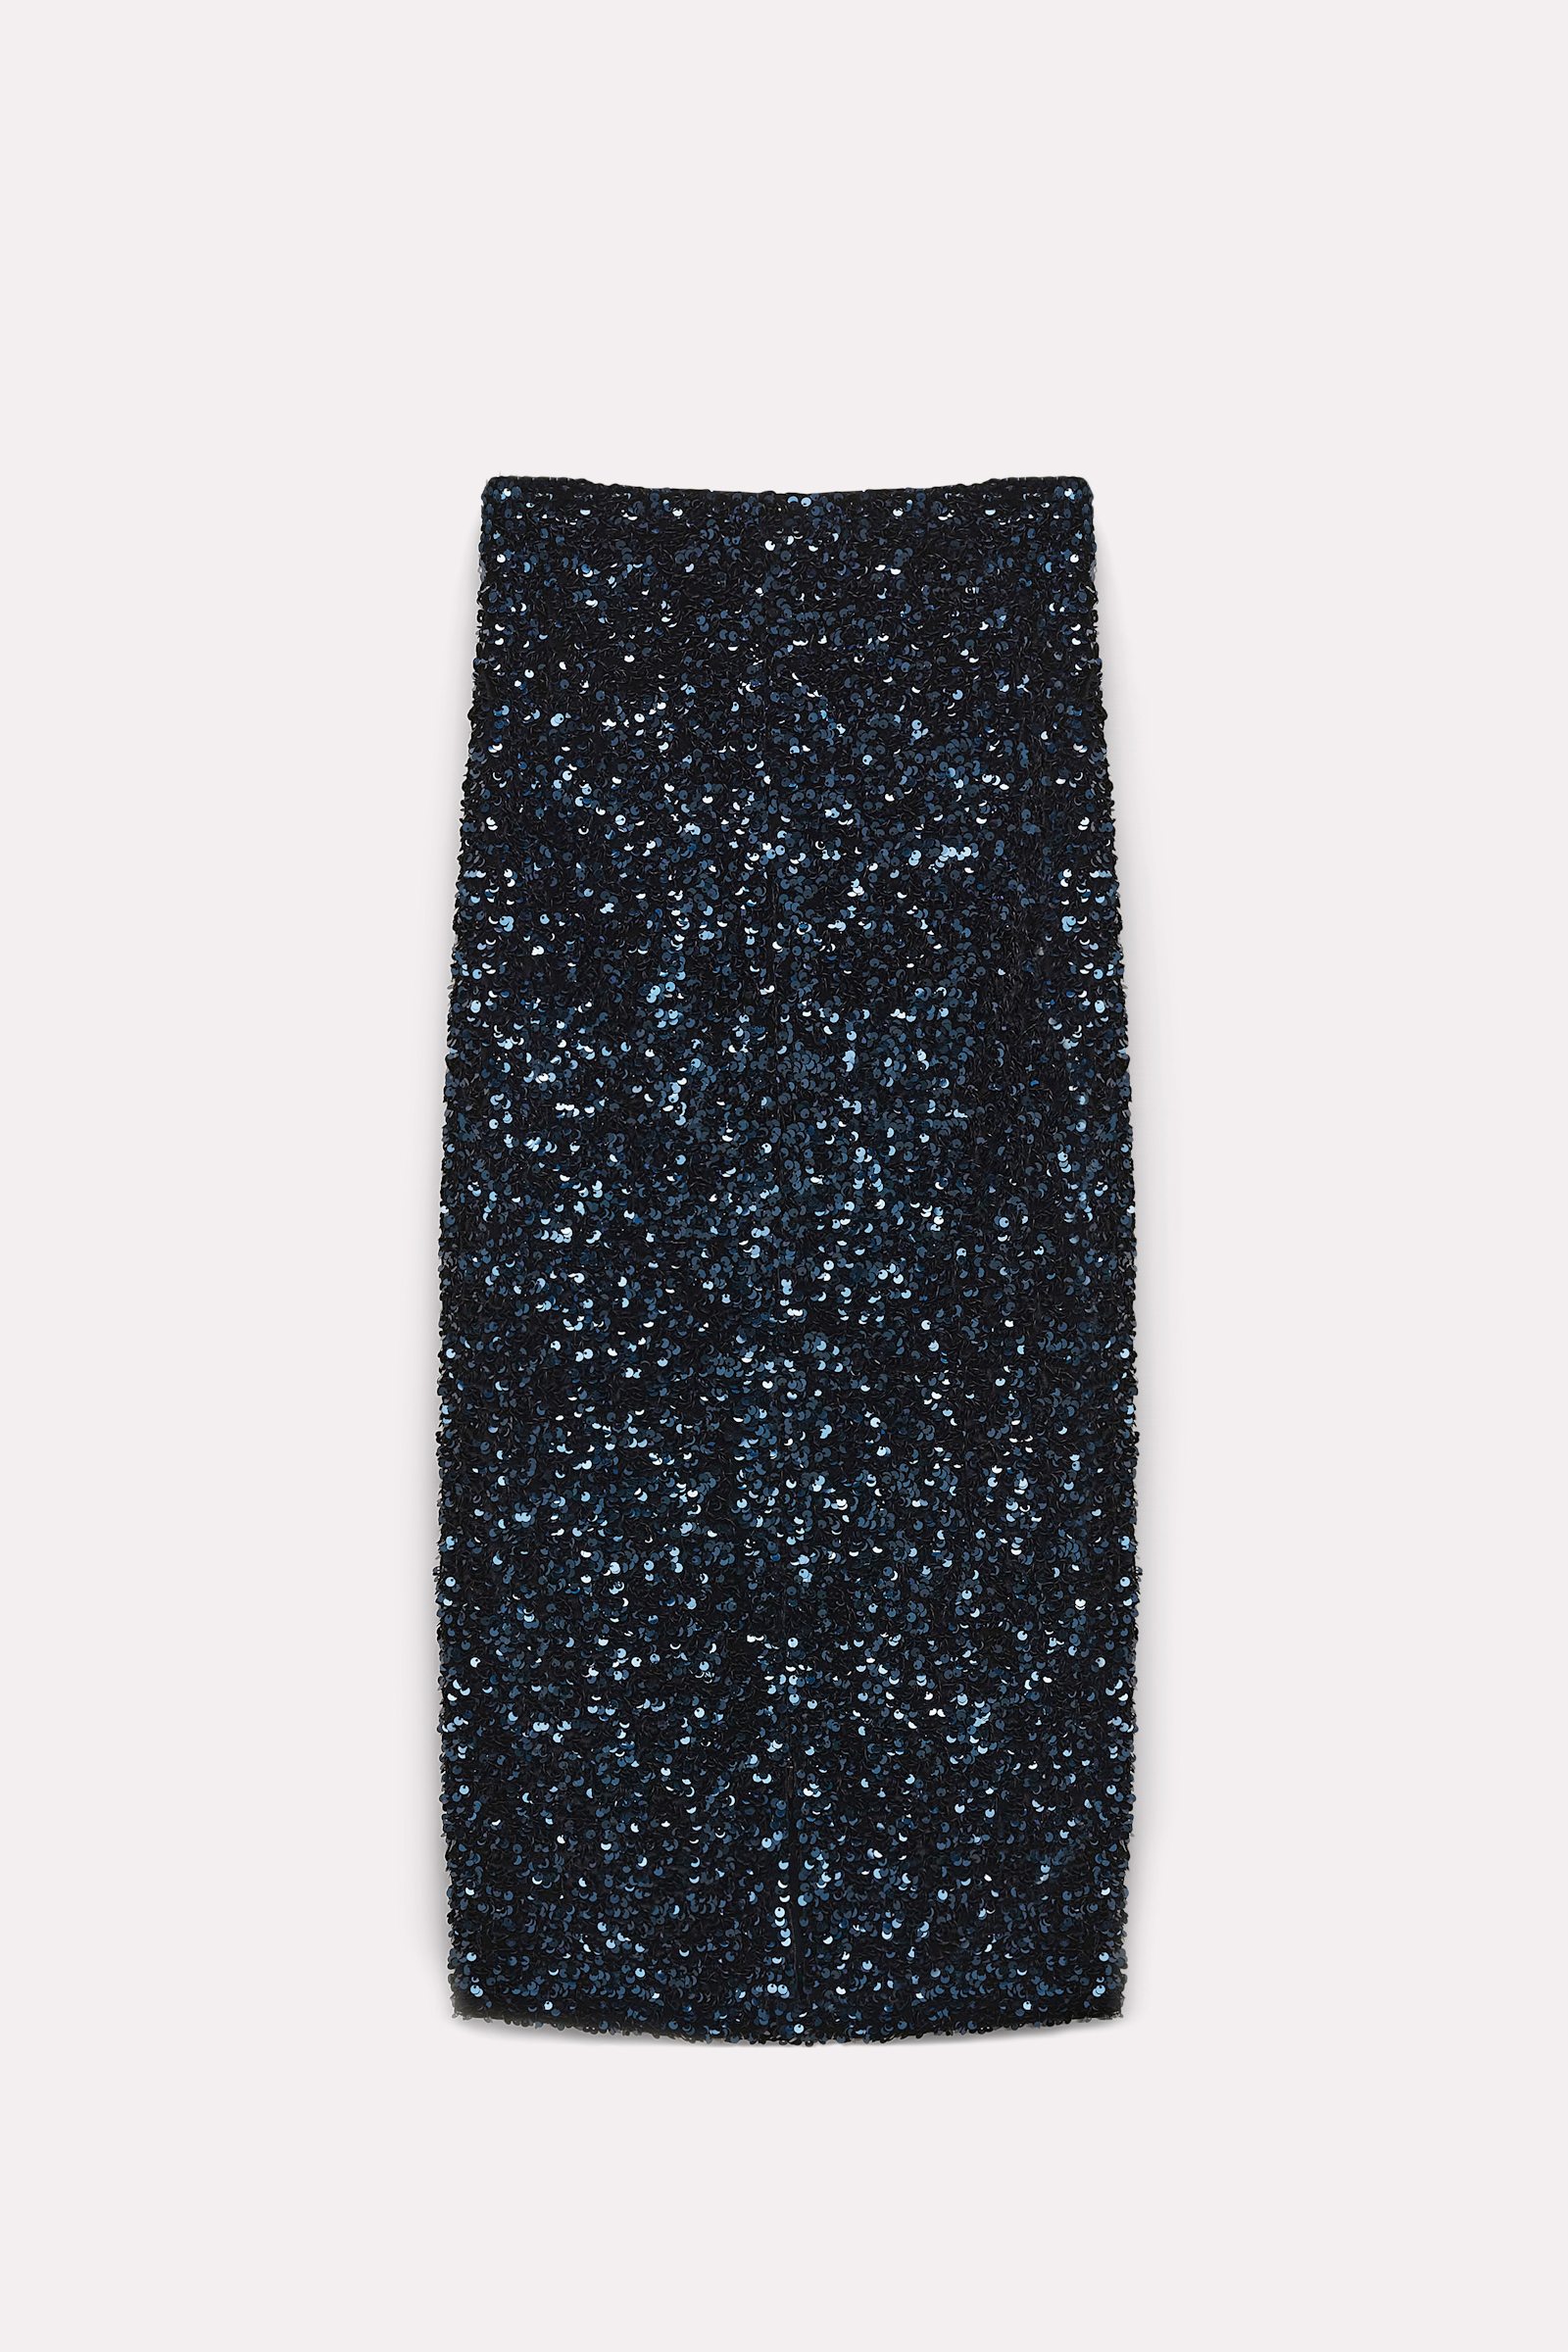 Dorothee Schumacher Sequin embellished velvet pencil skirt dark navy